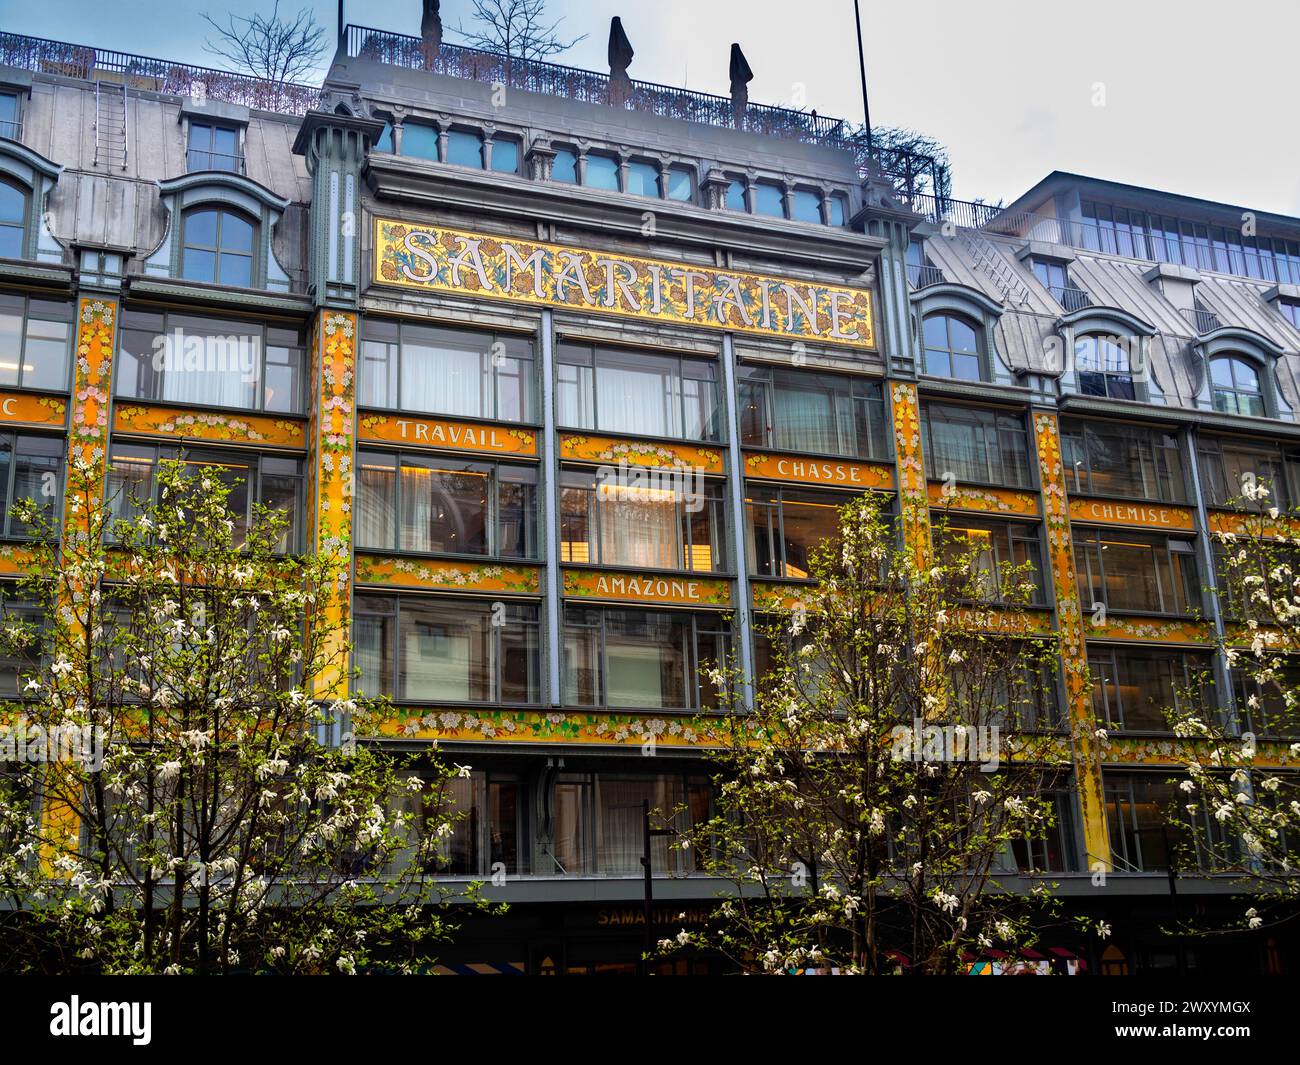 Paris 1er arrondissement. Facade of the Samaritaine (Grand magasin). Ile de France. France Stock Photo